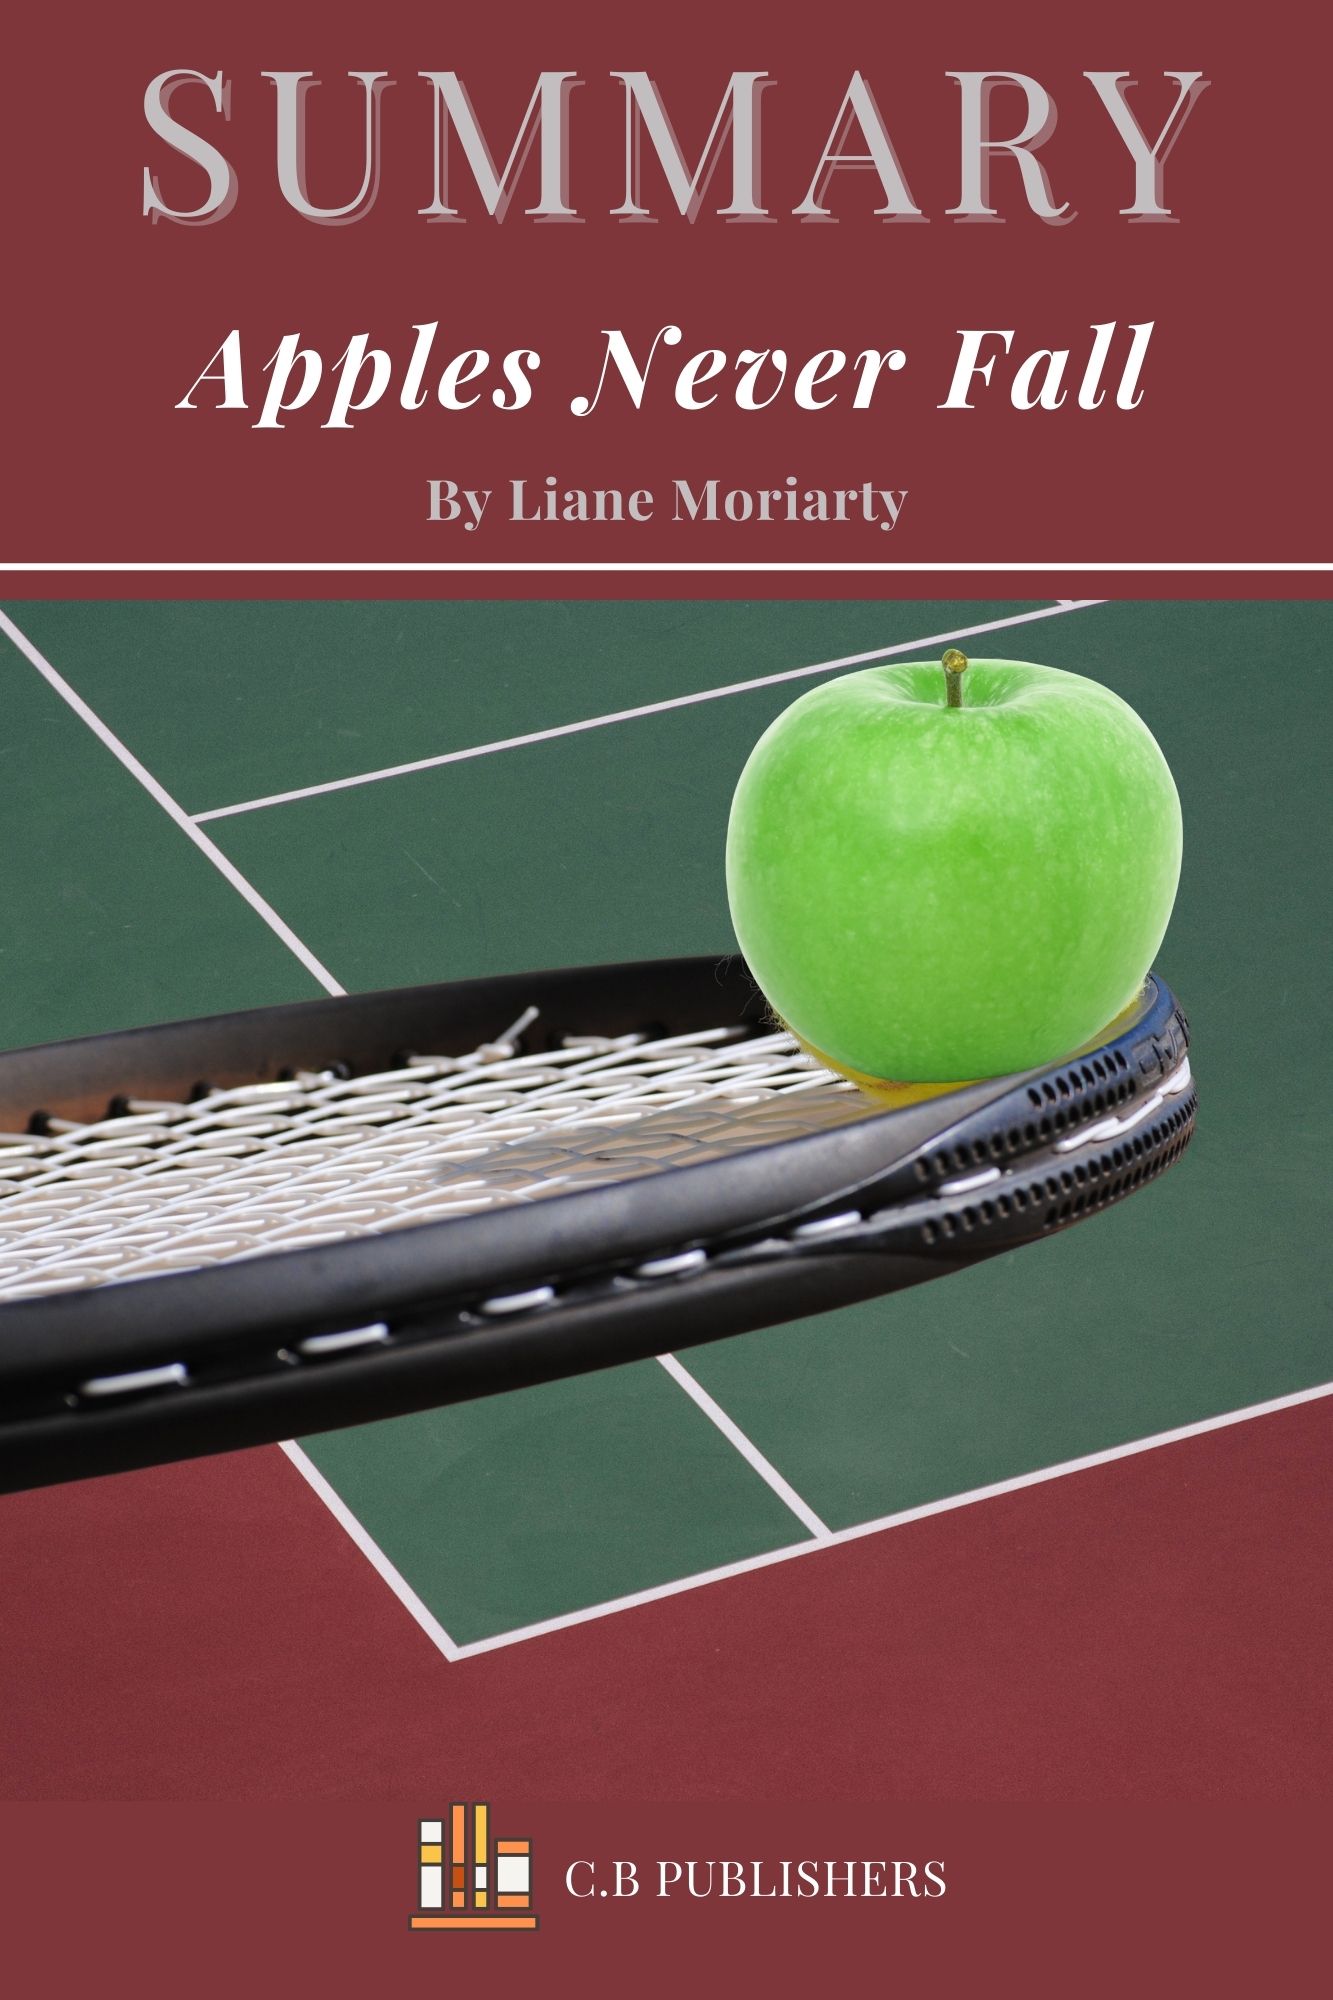 Apples Never Fall summary